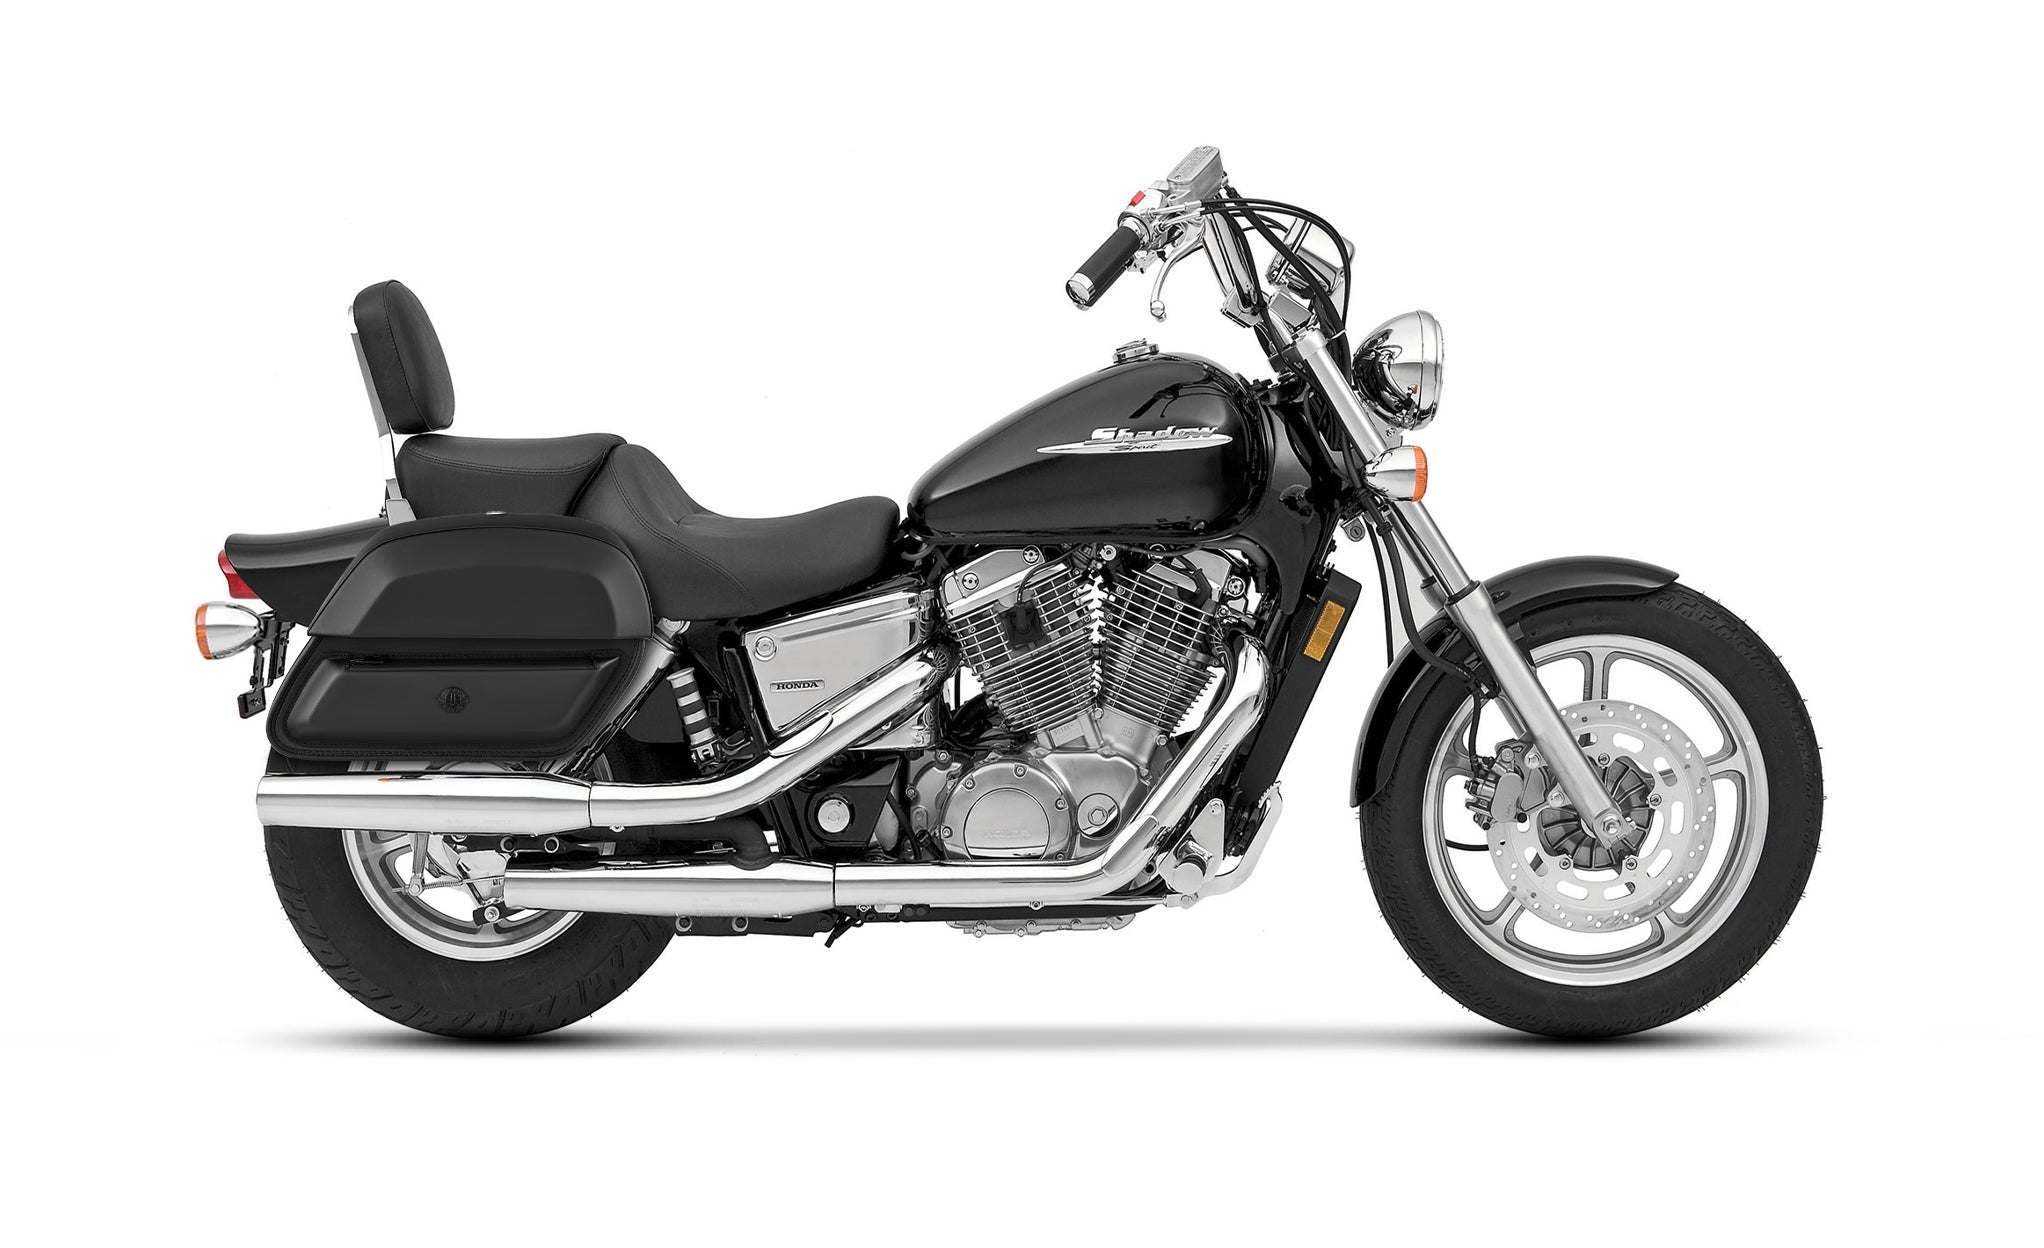 28L - Wraith Medium Shadow 1100 Spirit Leather Motorcycle Saddlebags BAG on Bike View @expand